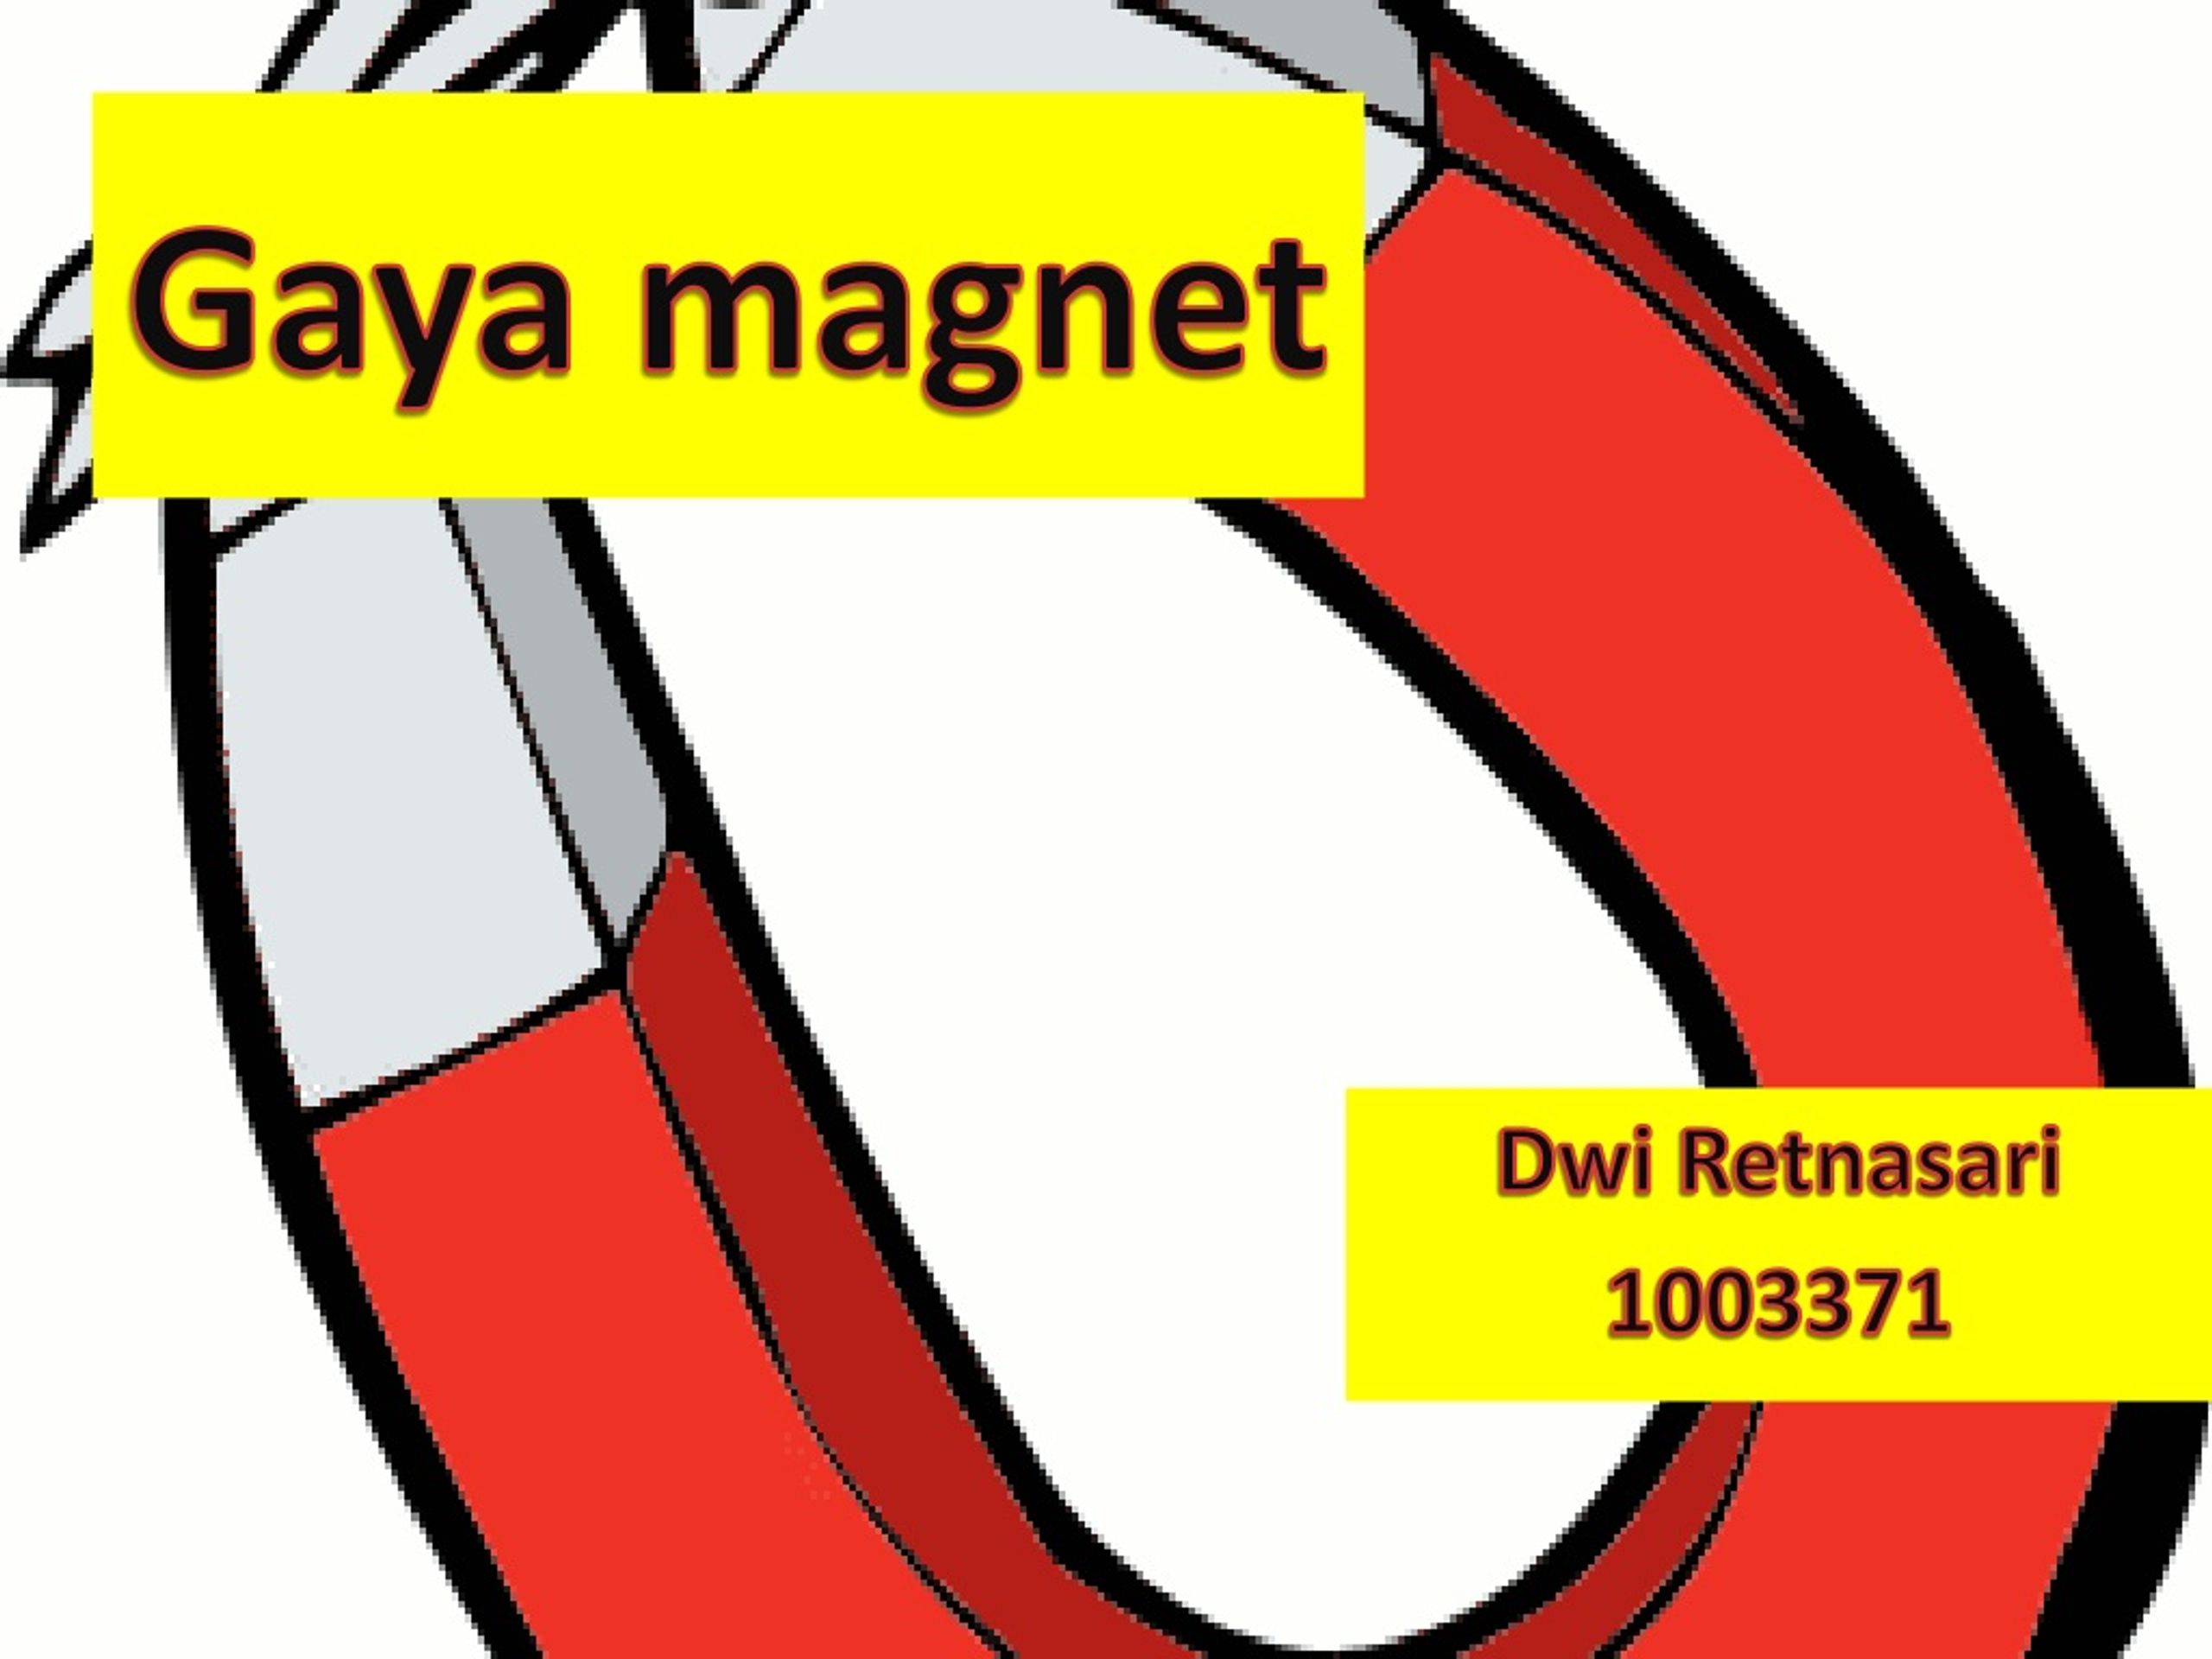 PPT - Gaya Magnet PowerPoint Presentation, free download - ID:860413